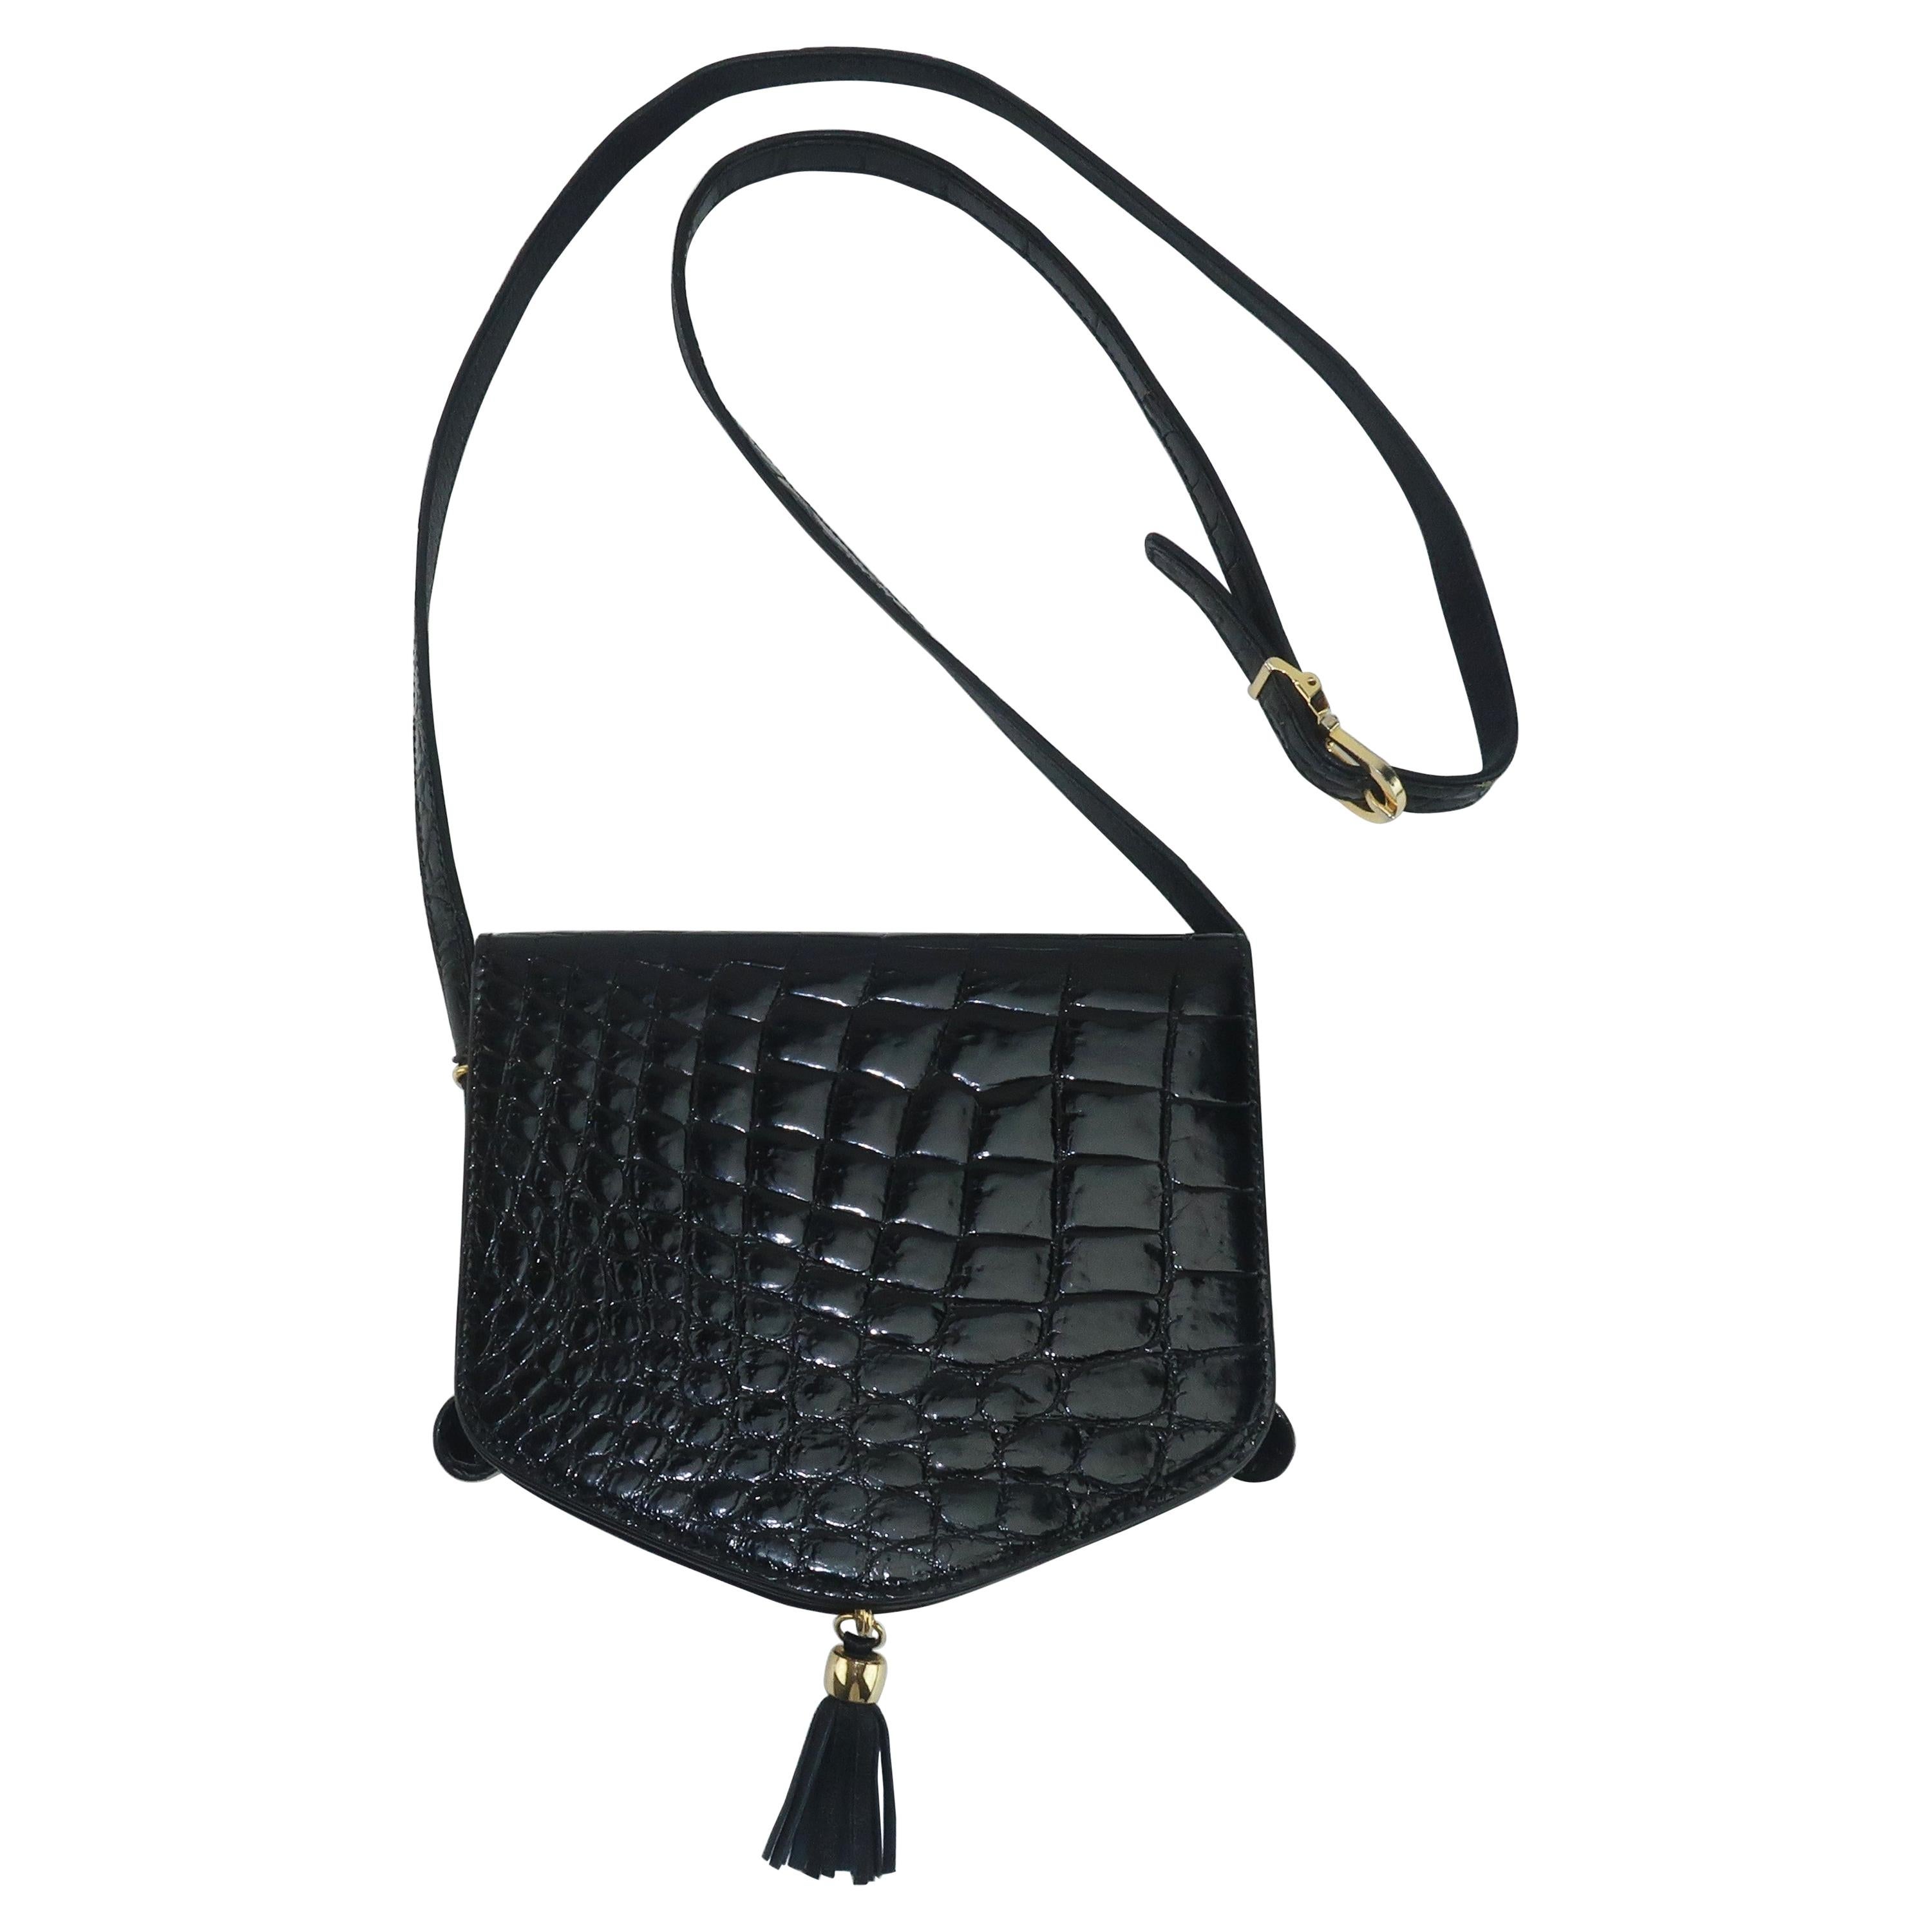 Harrods Black Alligator Embossed Leather French Handbag